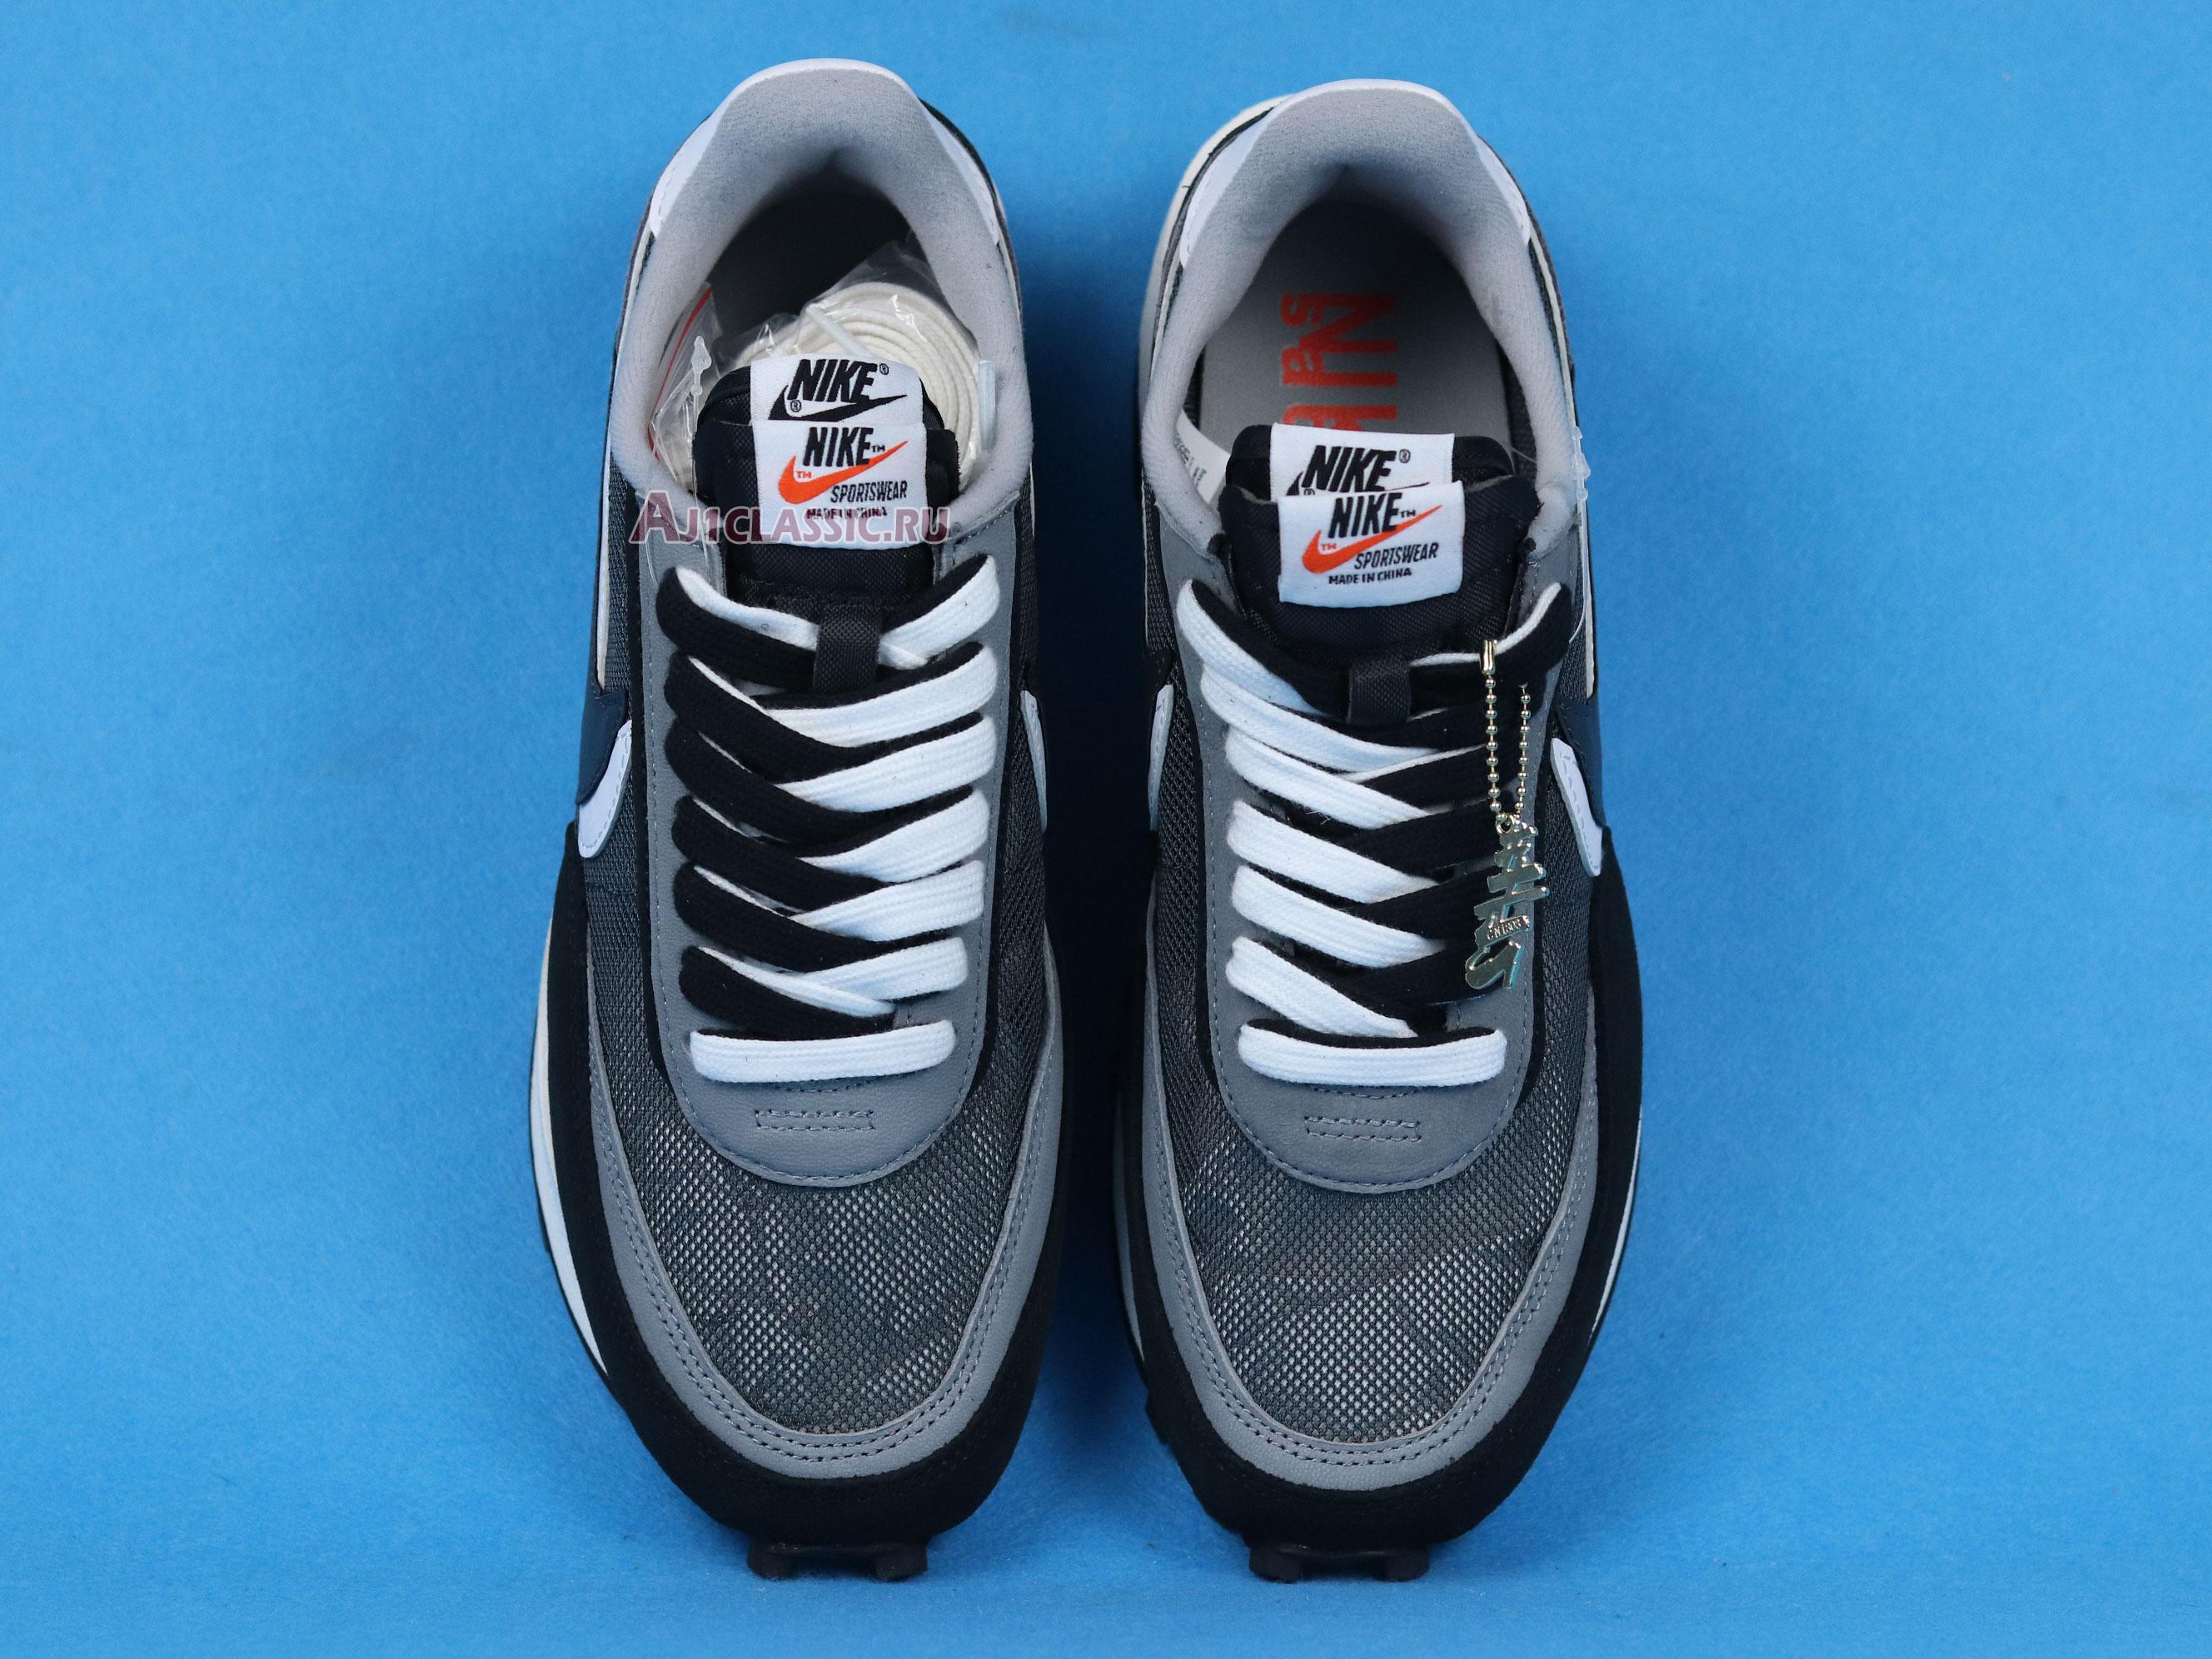 Sacai x Nike LDWaffle "Black" BV0073-001